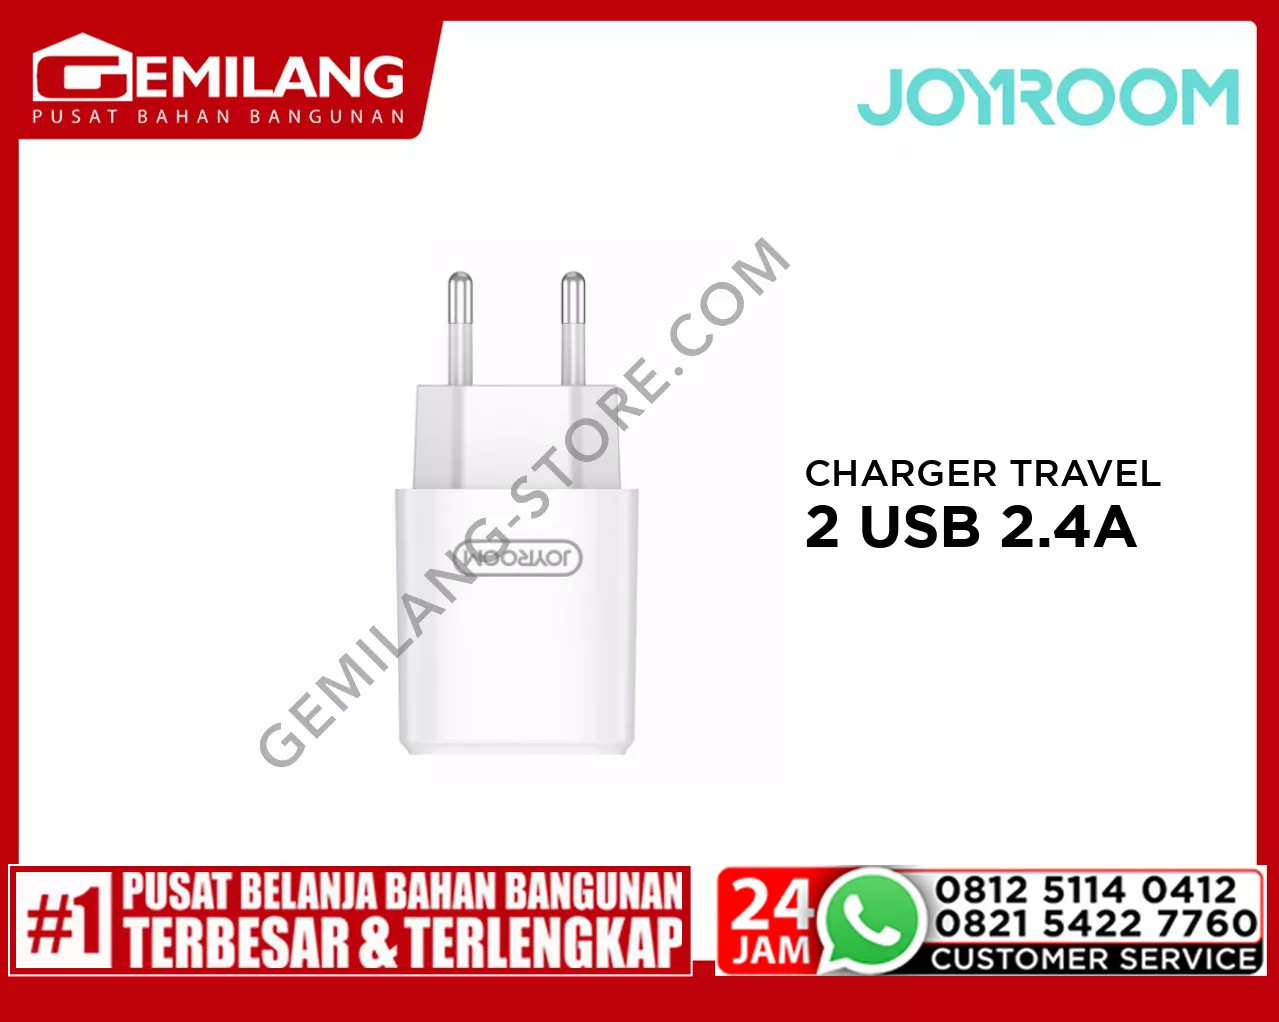 JOYROOM CHARGER TRAVEL 2 USB 2.4A L-M226